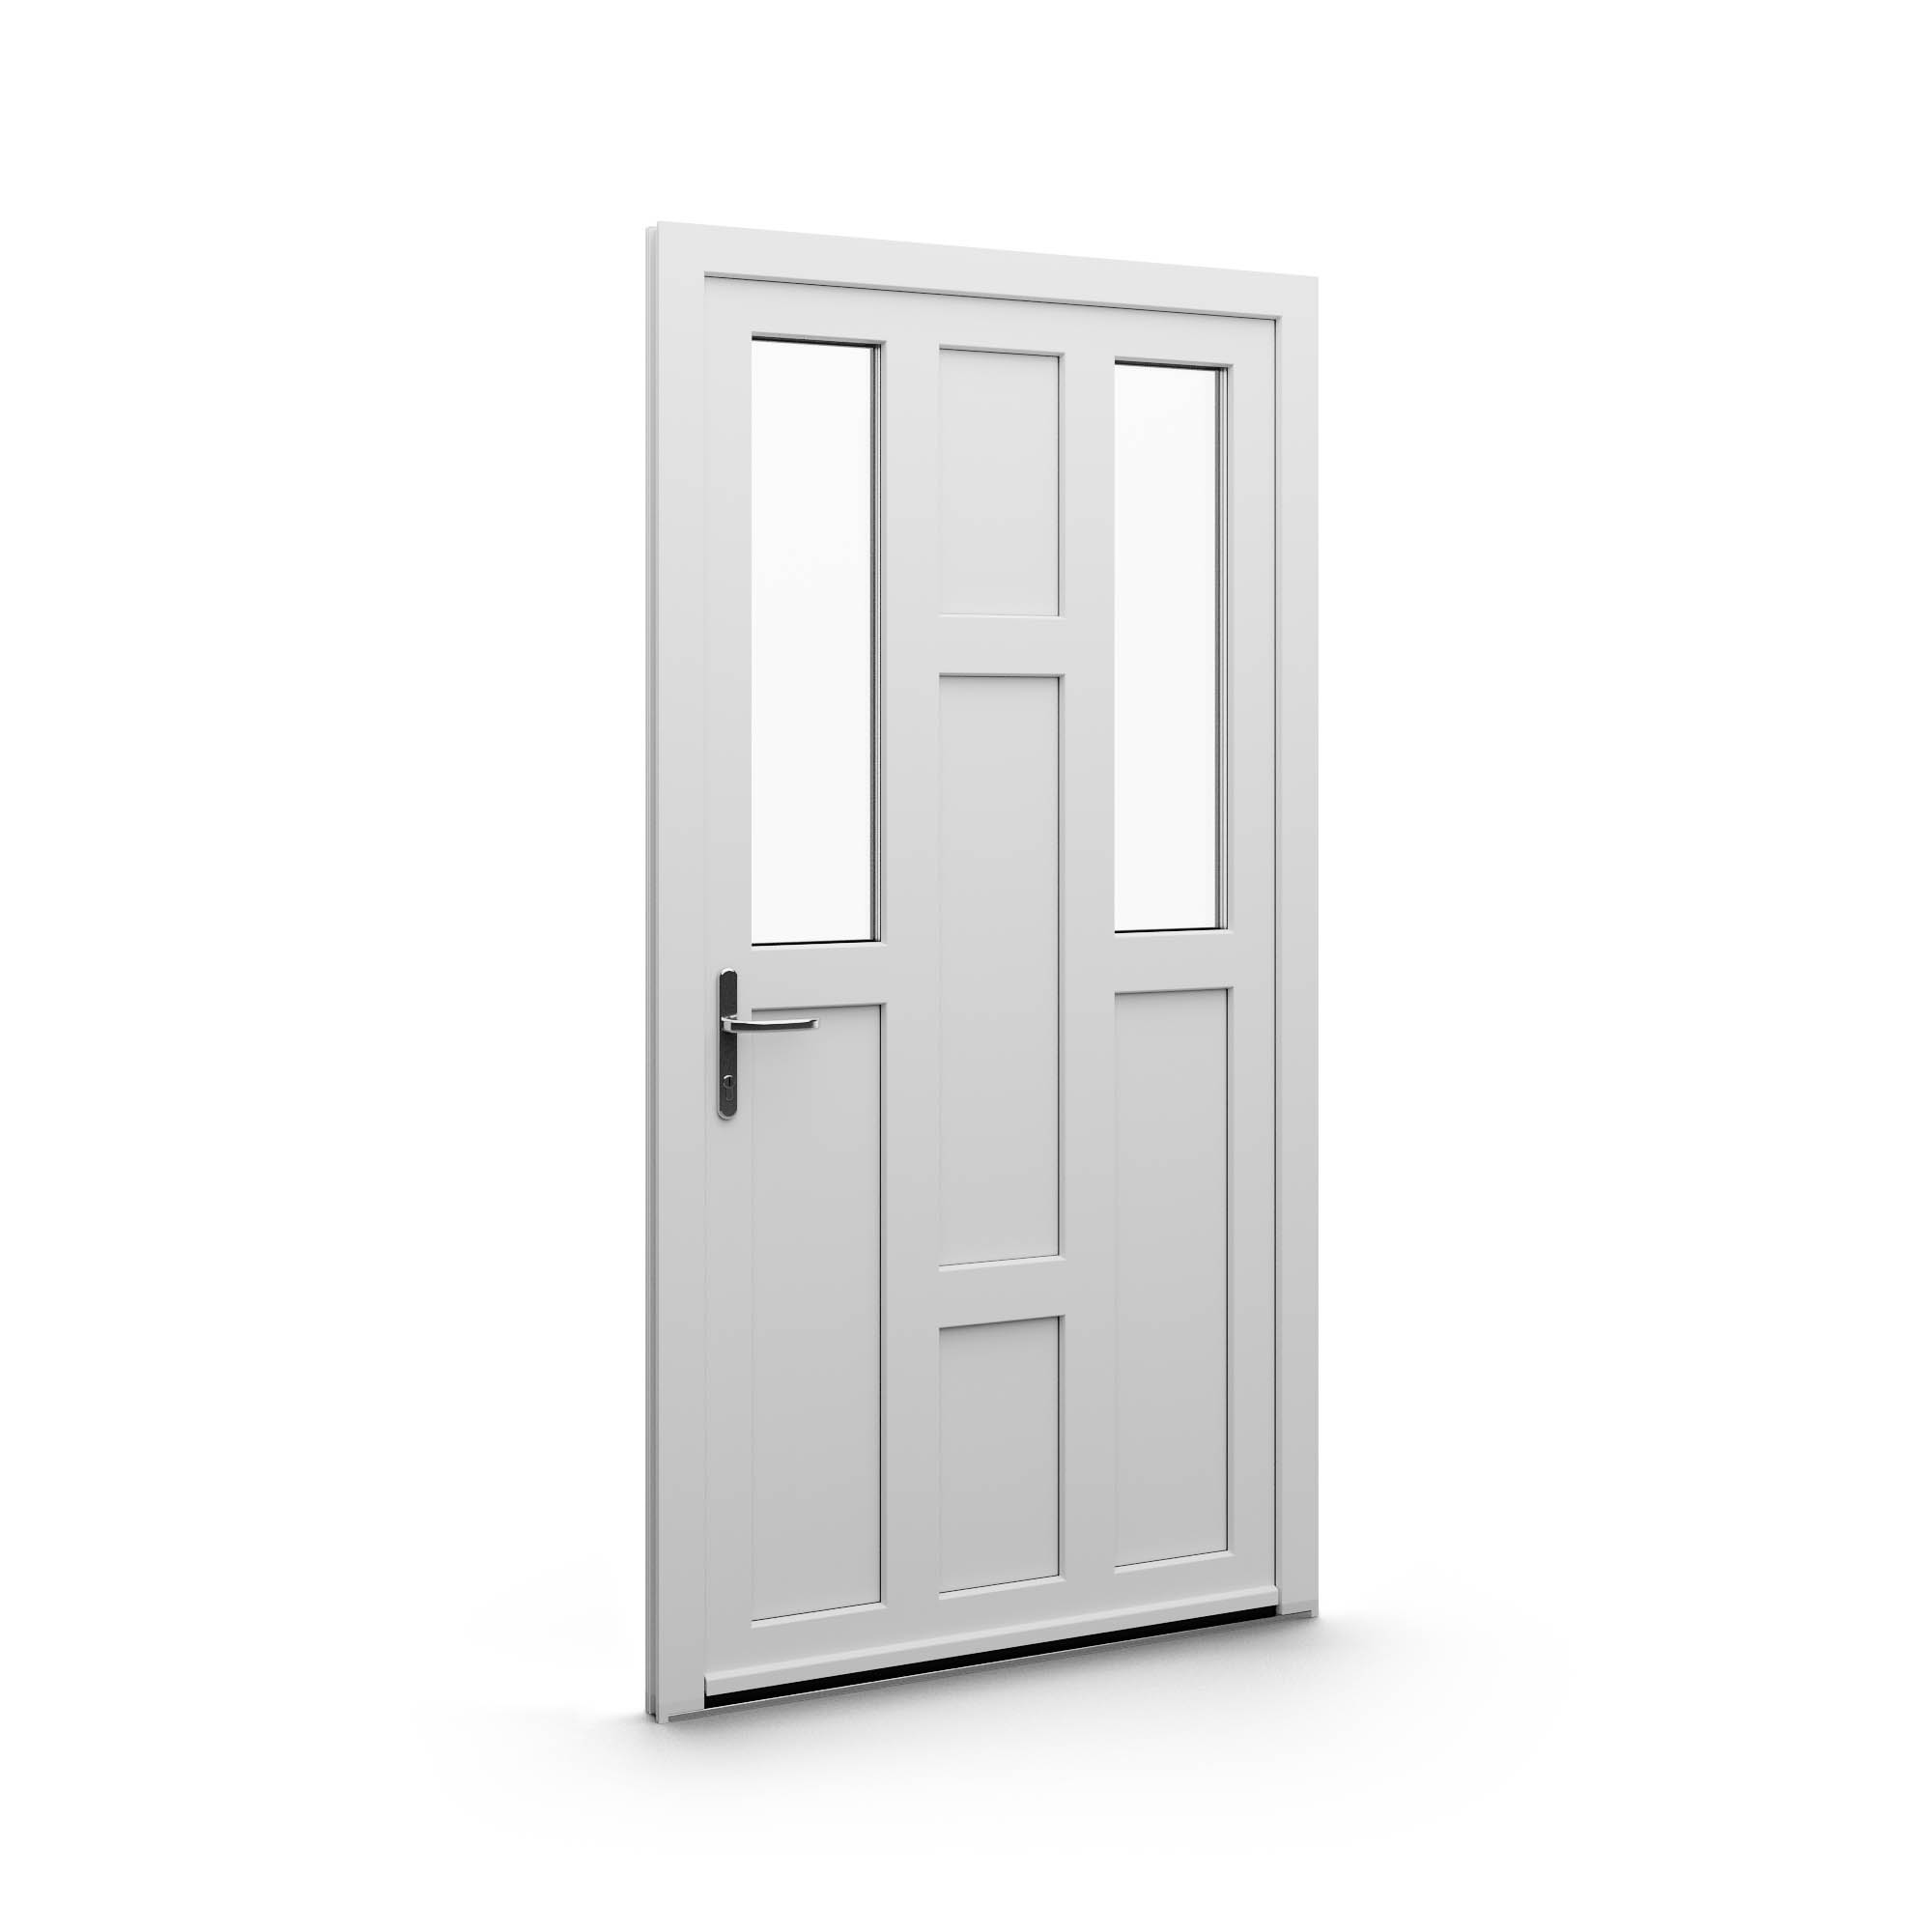 PVC model doors